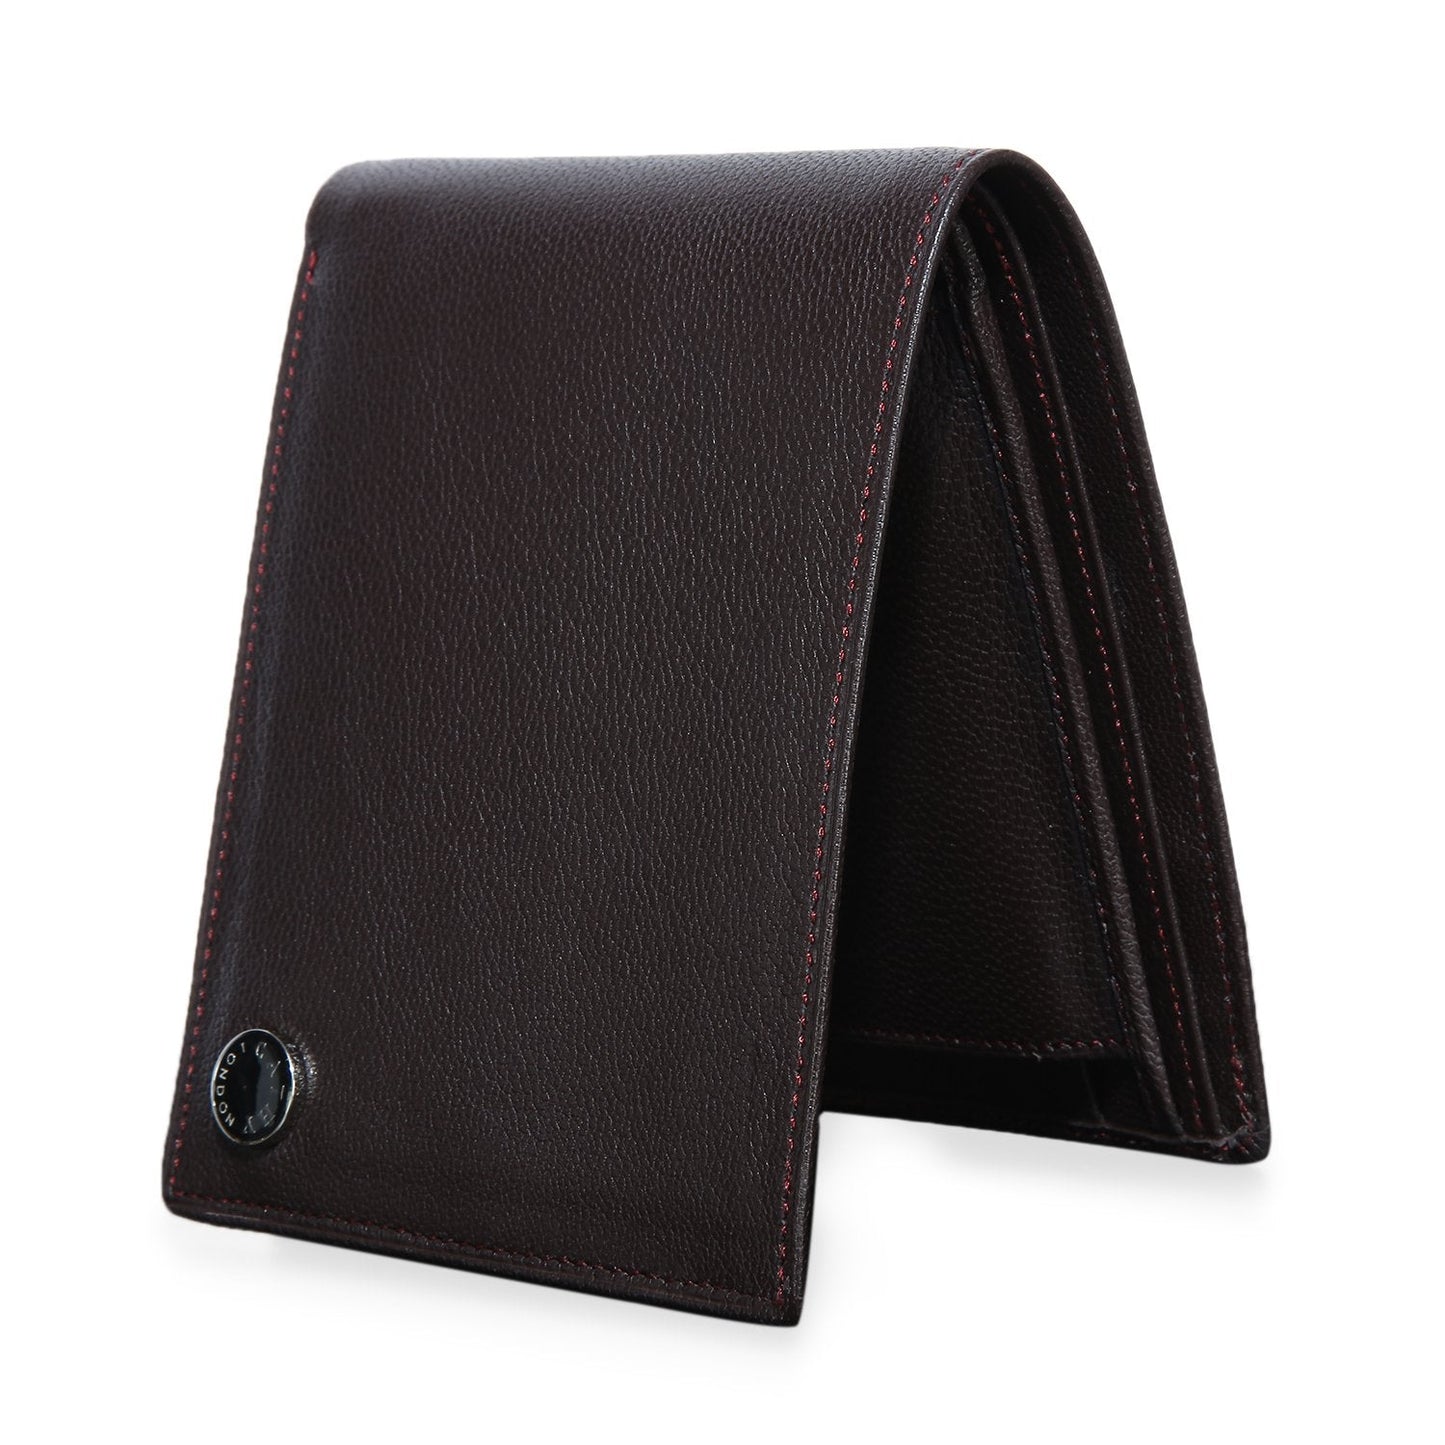 Brown Colour Bi-Fold Italian Leather Slim Wallet (7 Card Slot + 2 Hidden Compartment + 1 ID Slot + Coin Pocket + Cash Compartment)